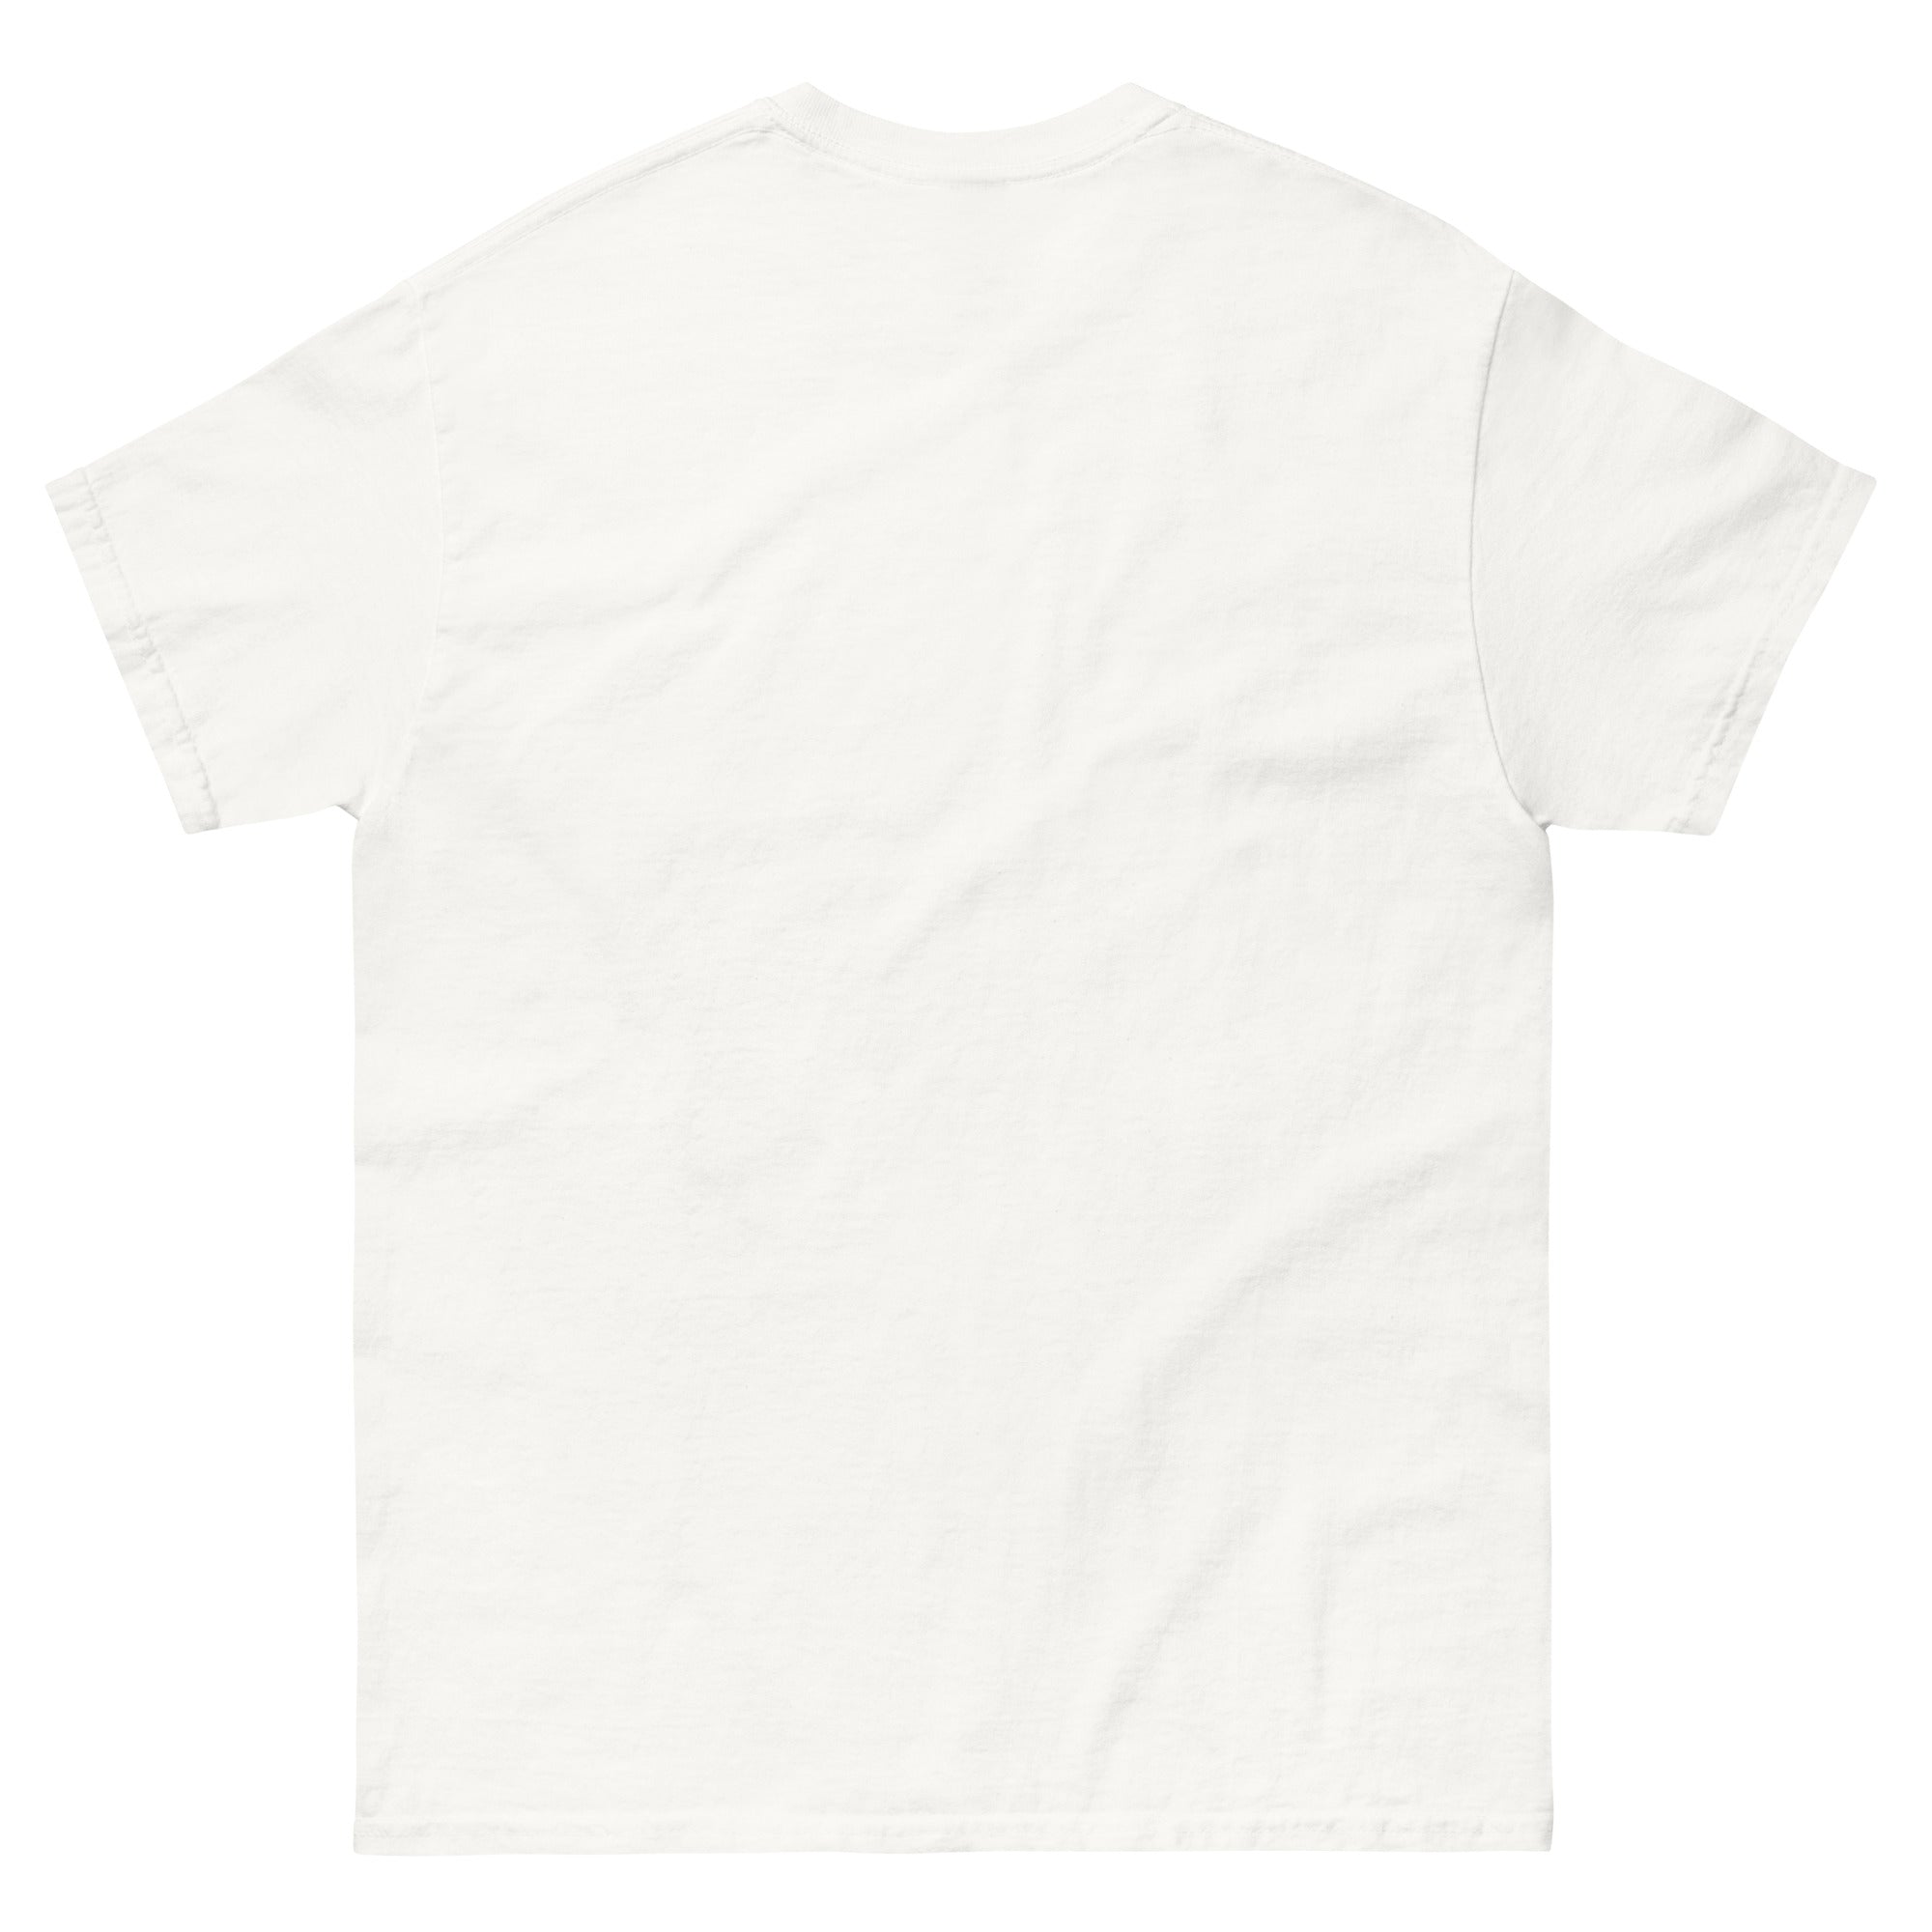 Camiseta "Silencio" by Flame